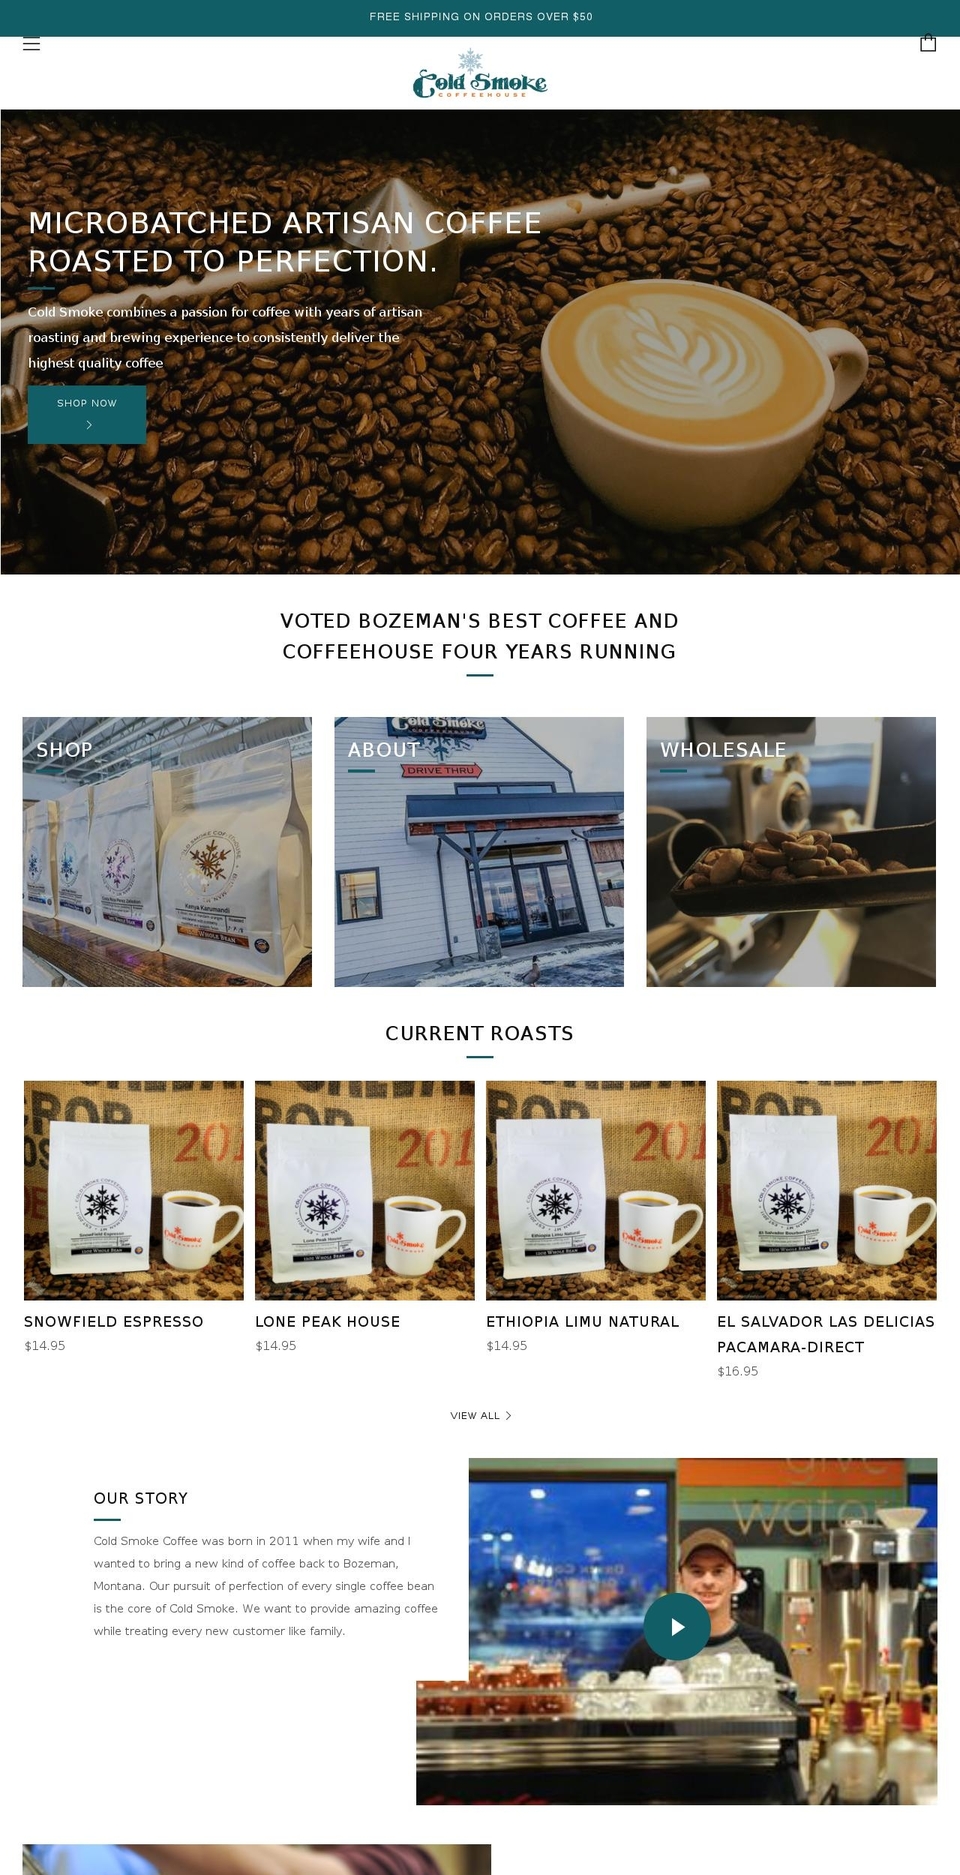 coldsmoke.coffee shopify website screenshot